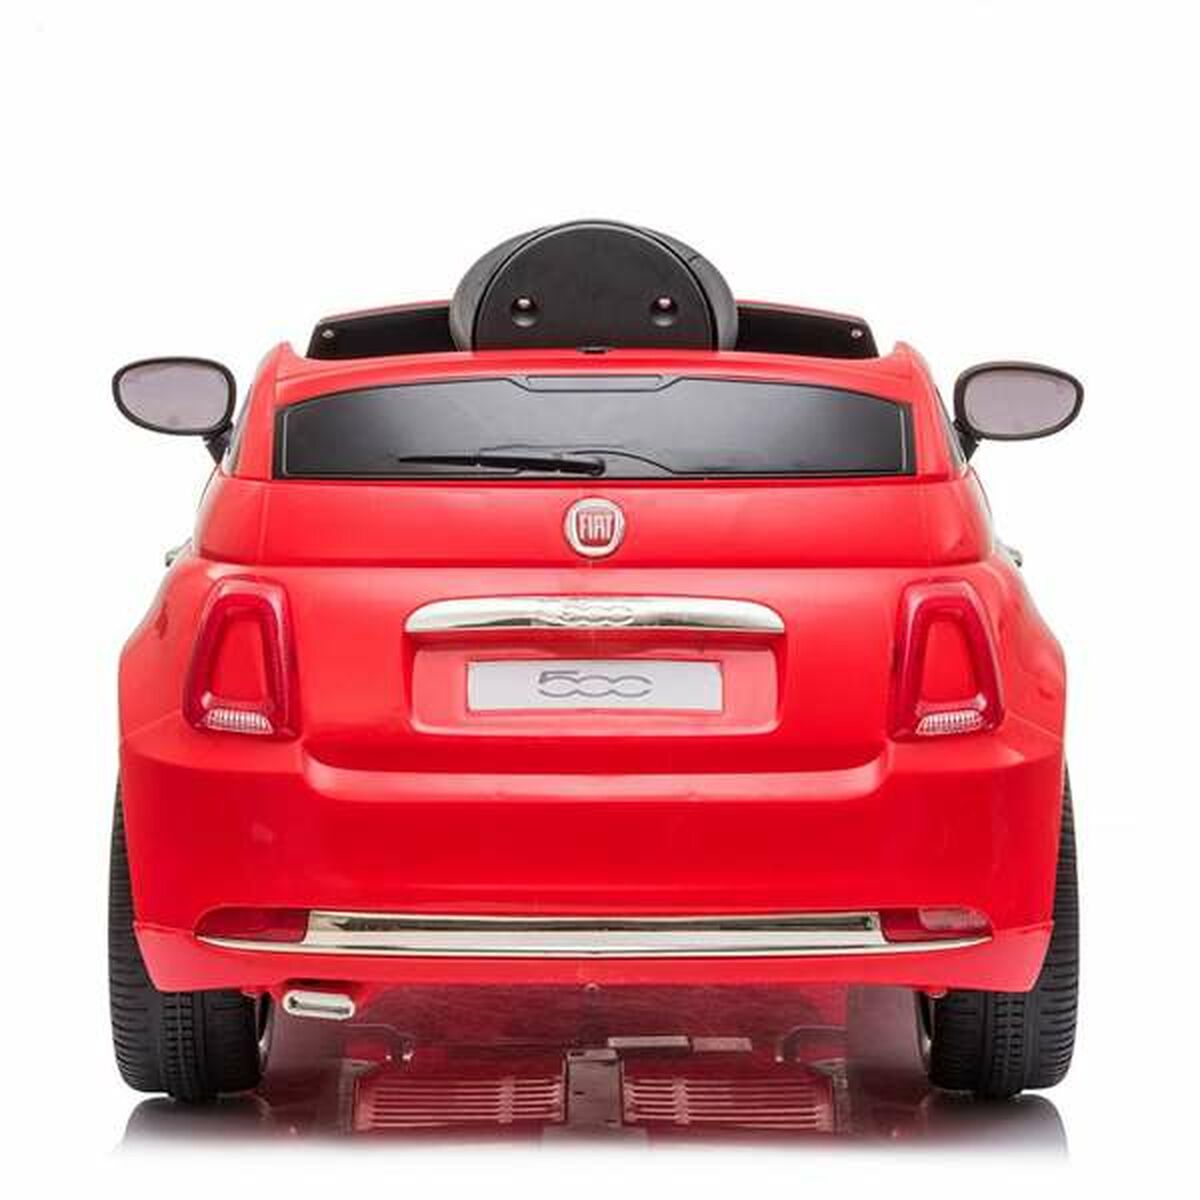 Elektroauto für Kinder Fiat 500 Rot Mit Fernbedienung MP3 30 W 6 V 113 x 67,5 x 53 cm